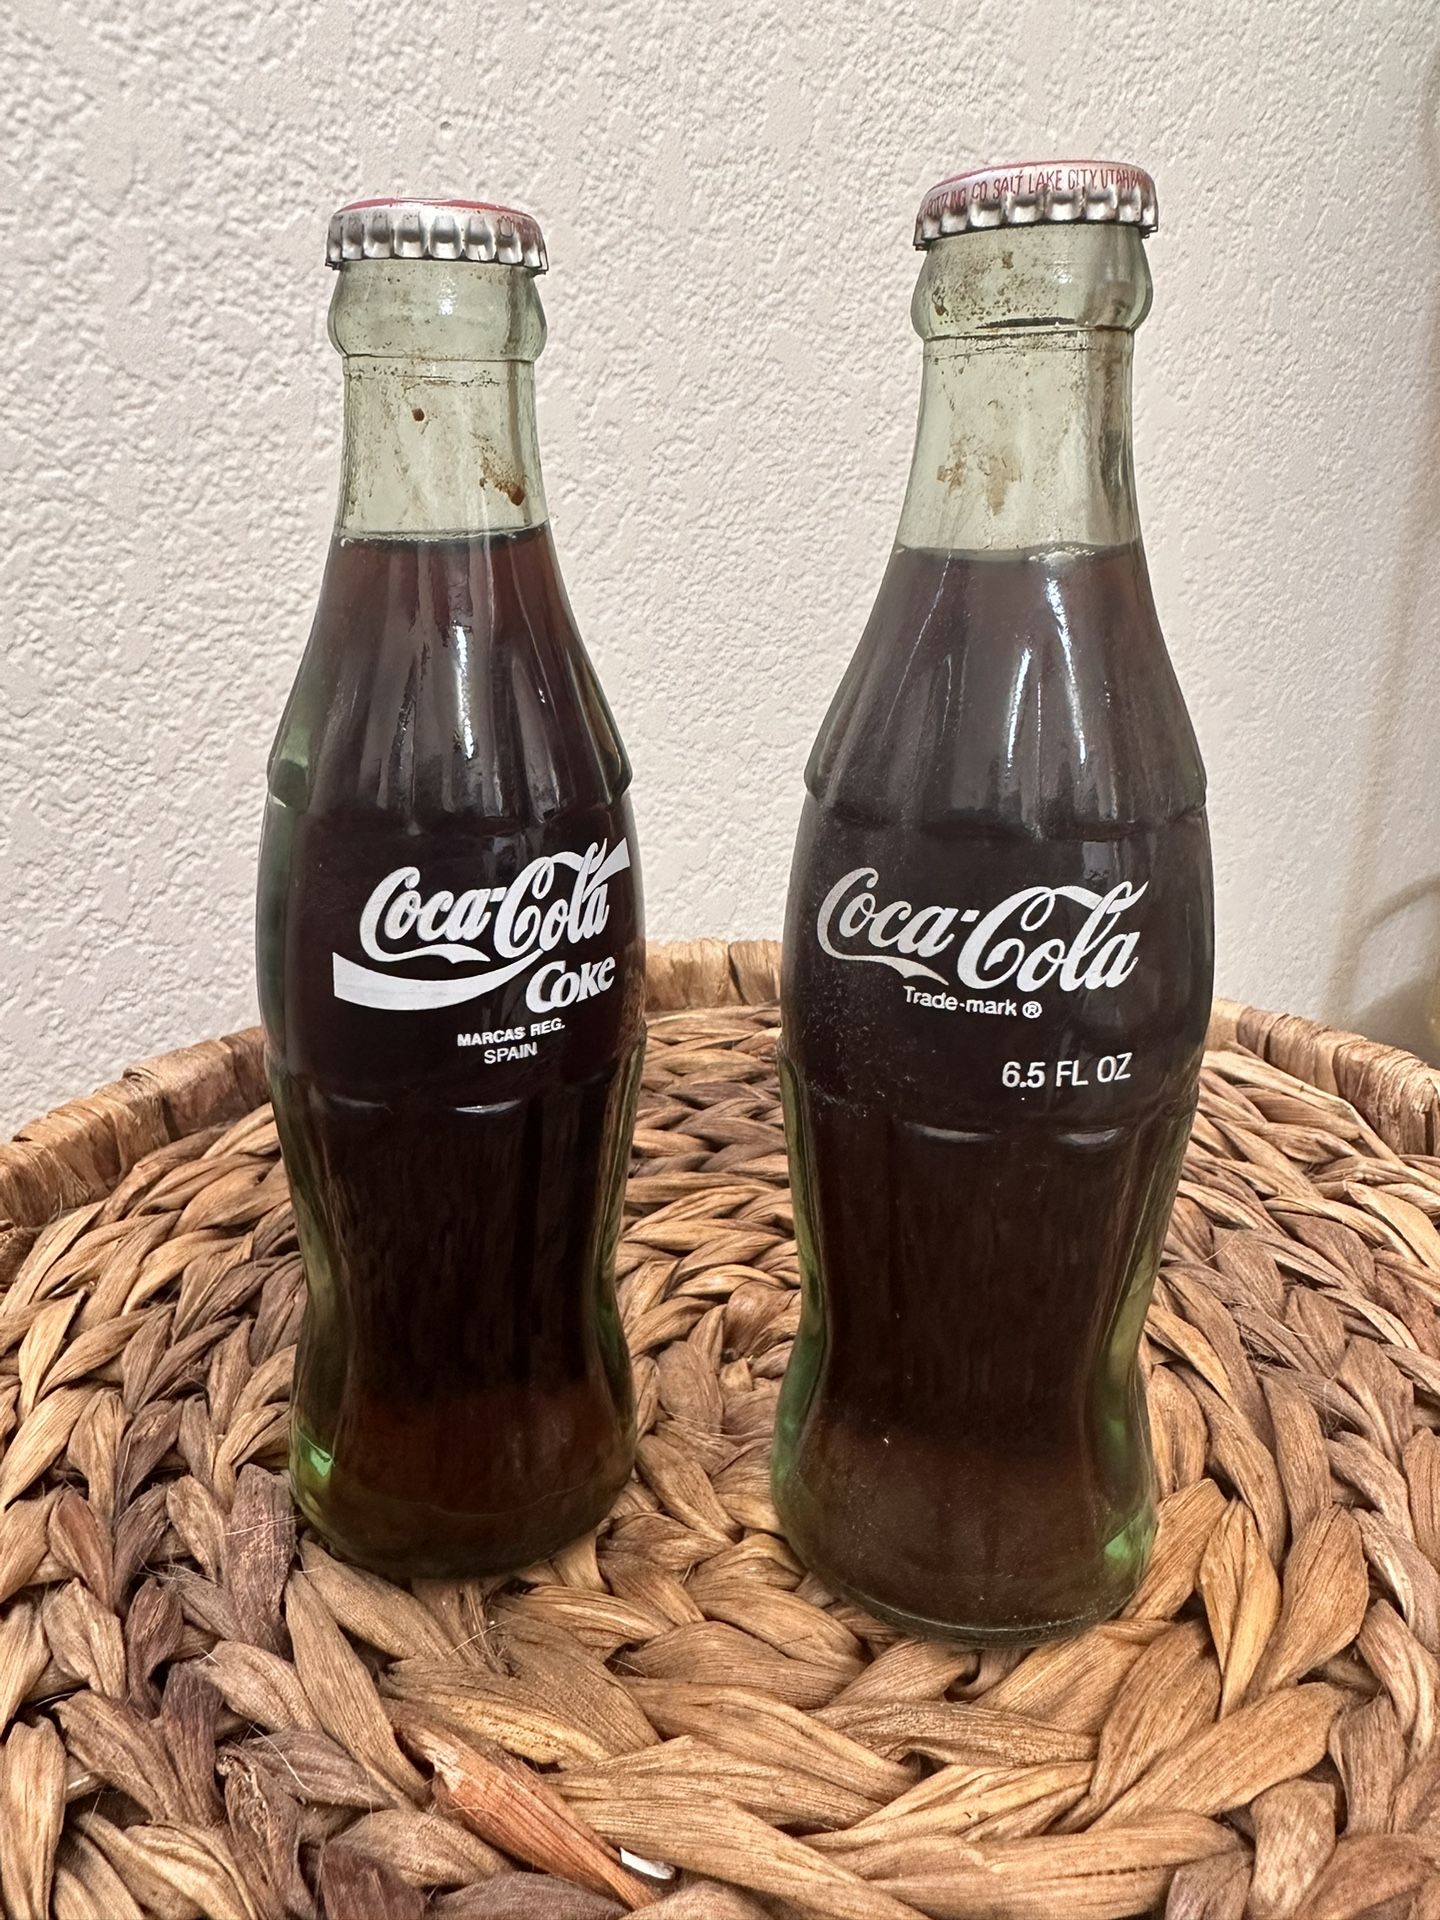 Vintage Spain Coca-Cola Bottle, Spain Coke Bottle, Green Glass, 6.5 fl oz